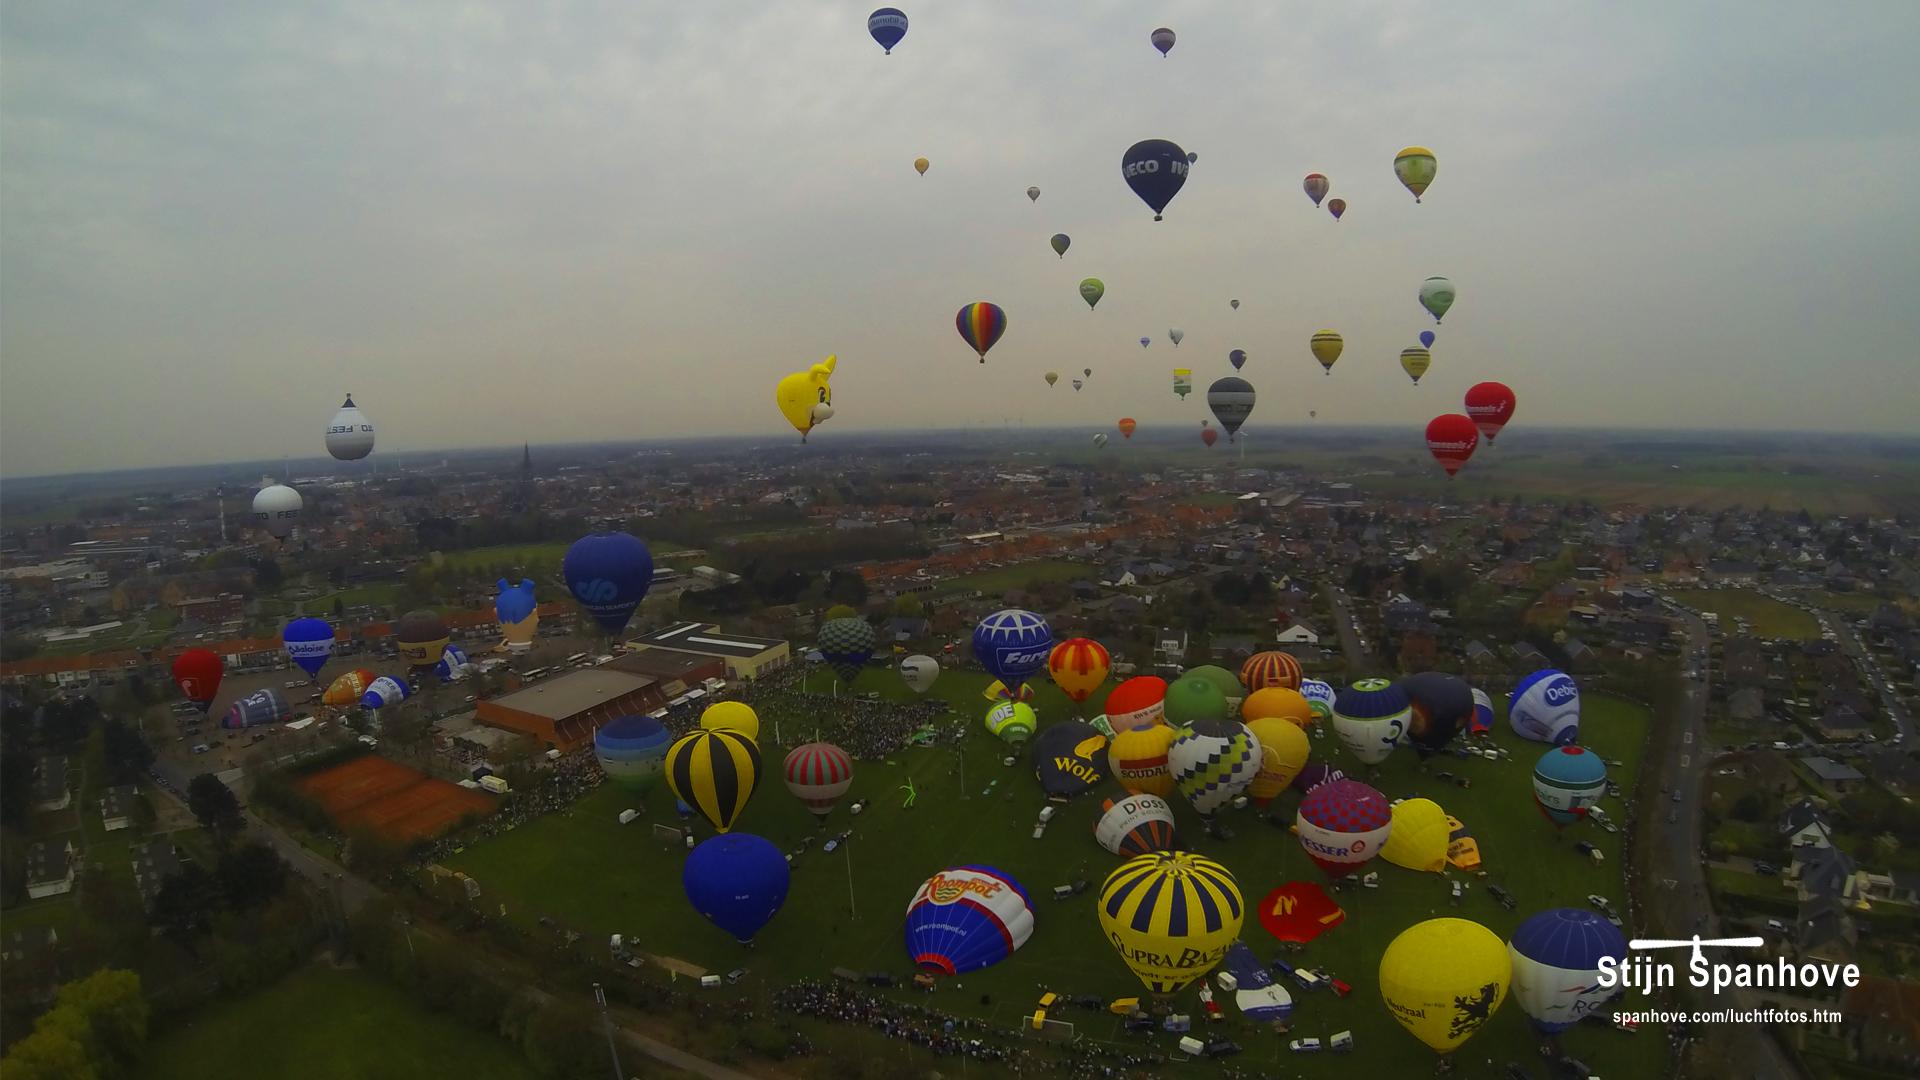 99 luftballons joe fm ballonmeeting eeklo